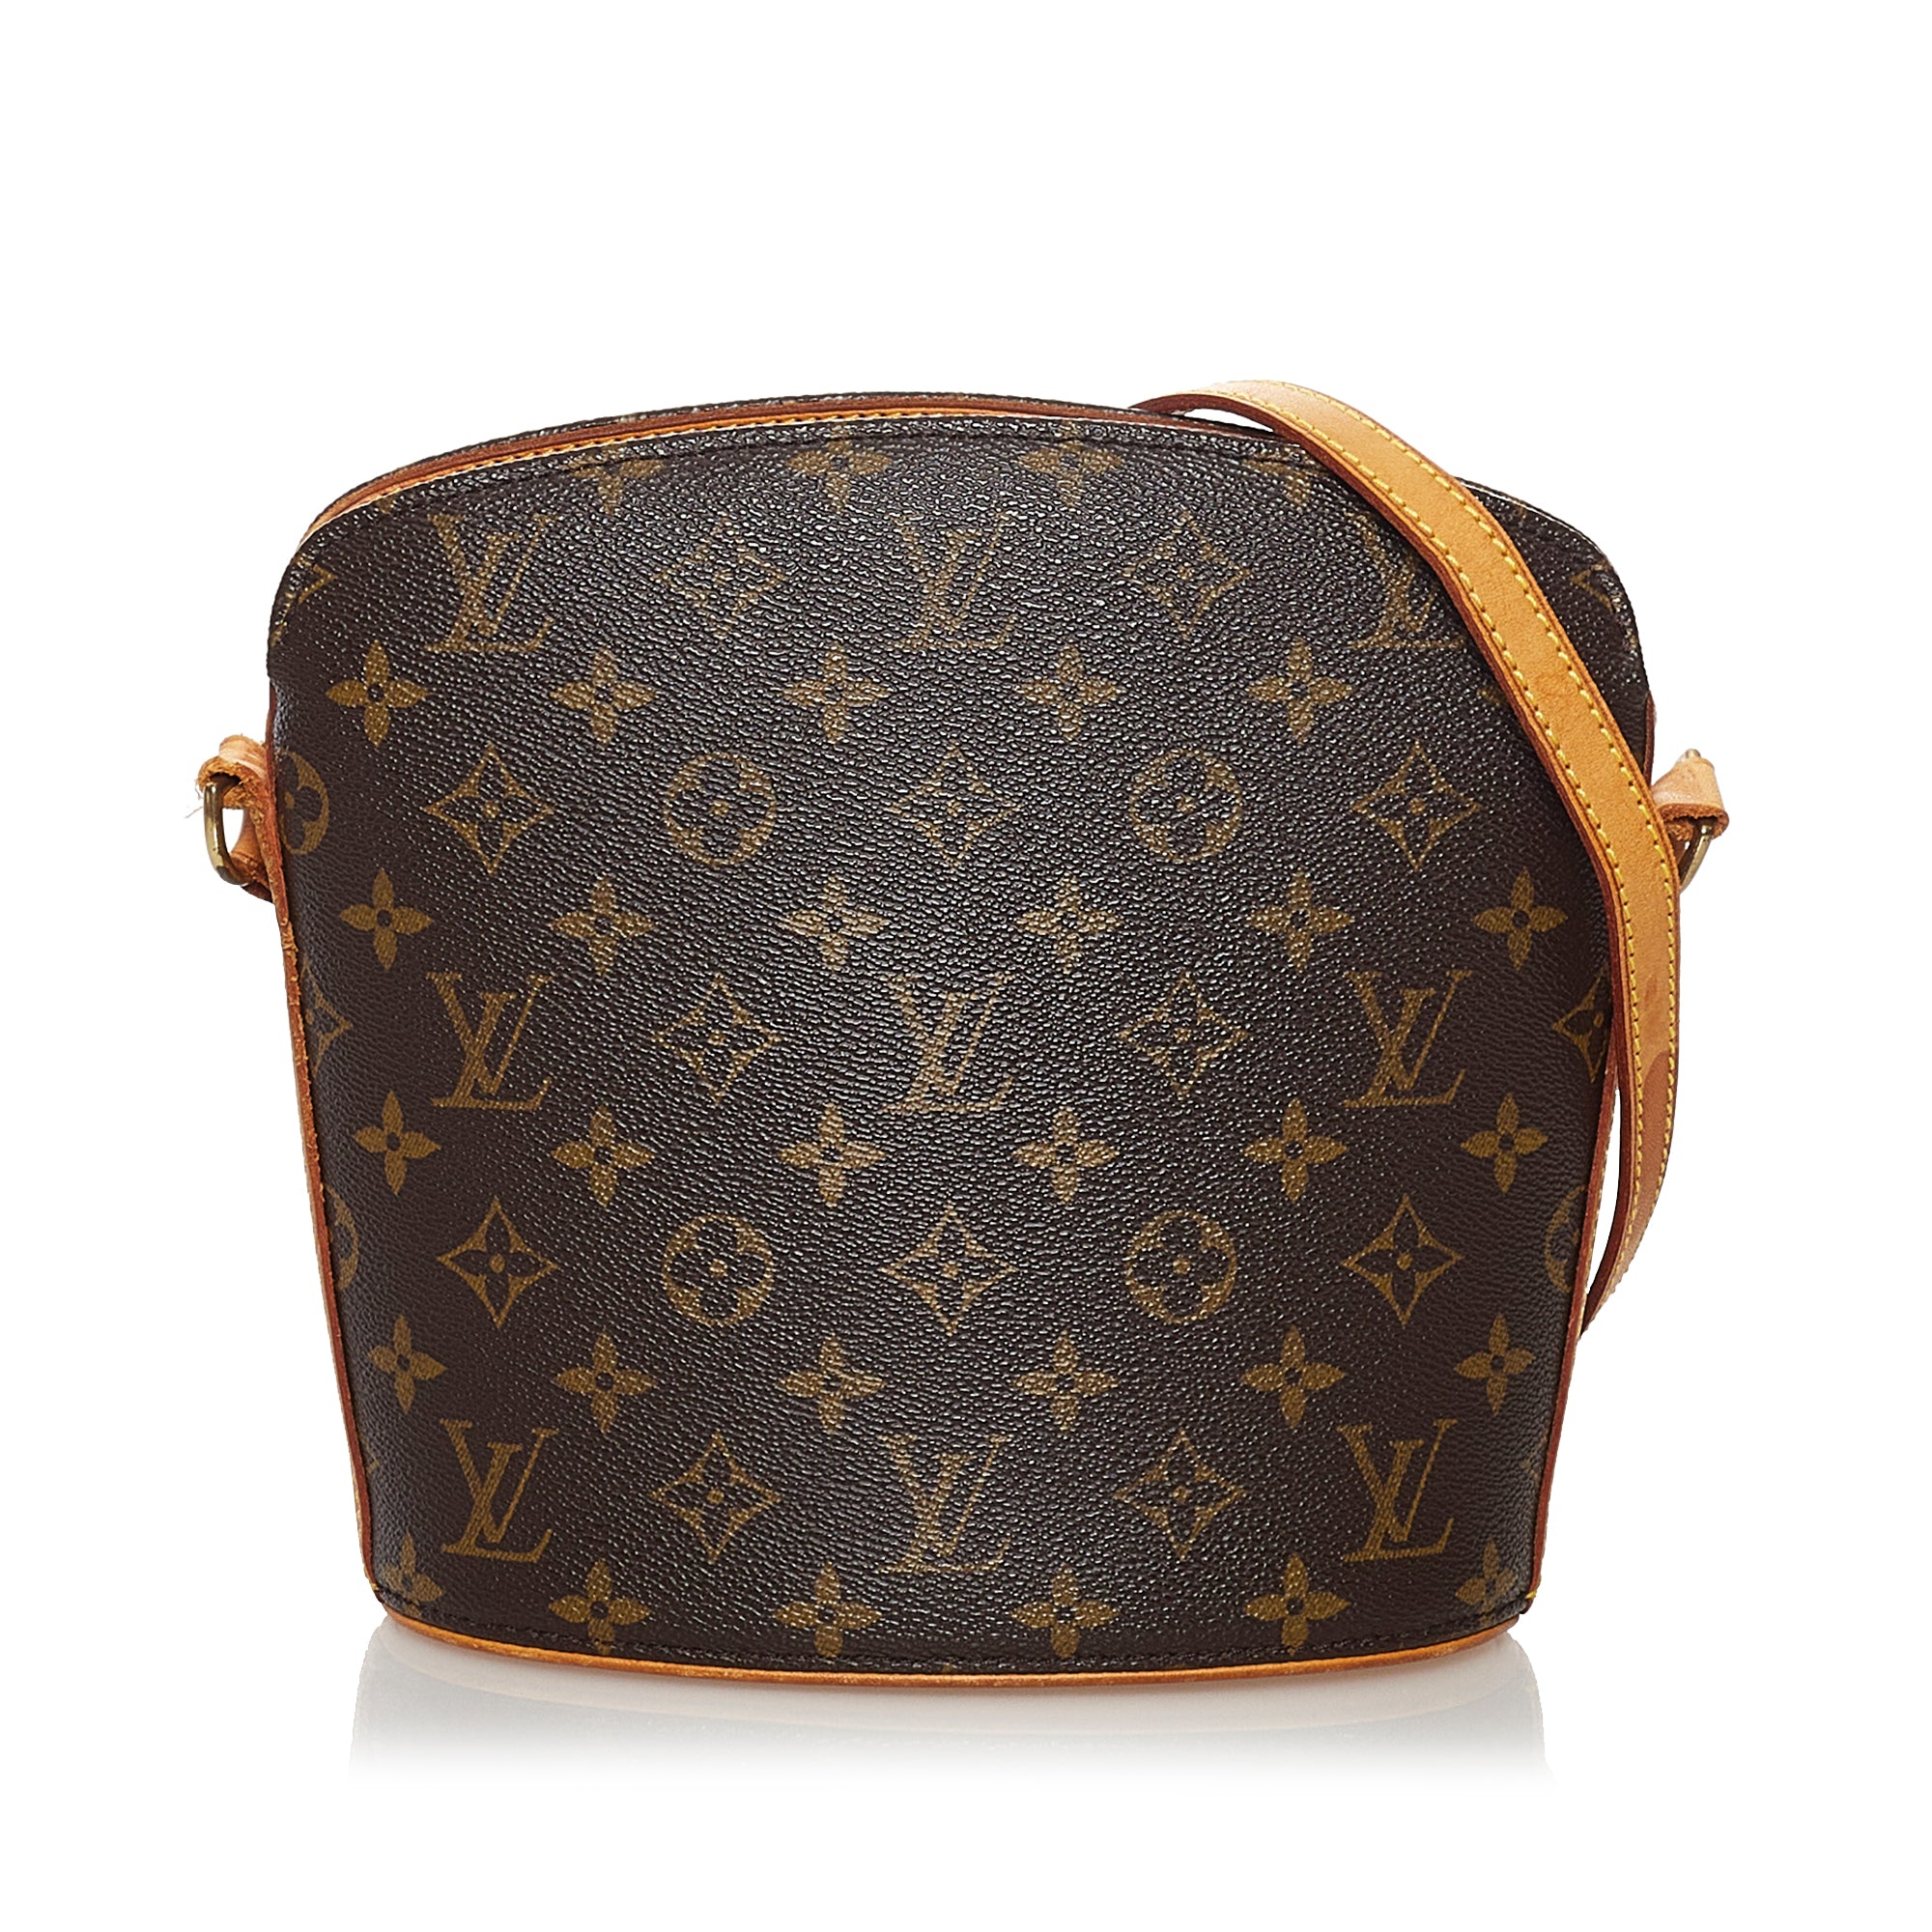 Louis Vuitton Monogram Drouot Crossbody Bag 13lk412s at 1stDibs  louis  vuitton crossbody bag, louis vuitton drouot crossbody bag, lv drouot  crossbody